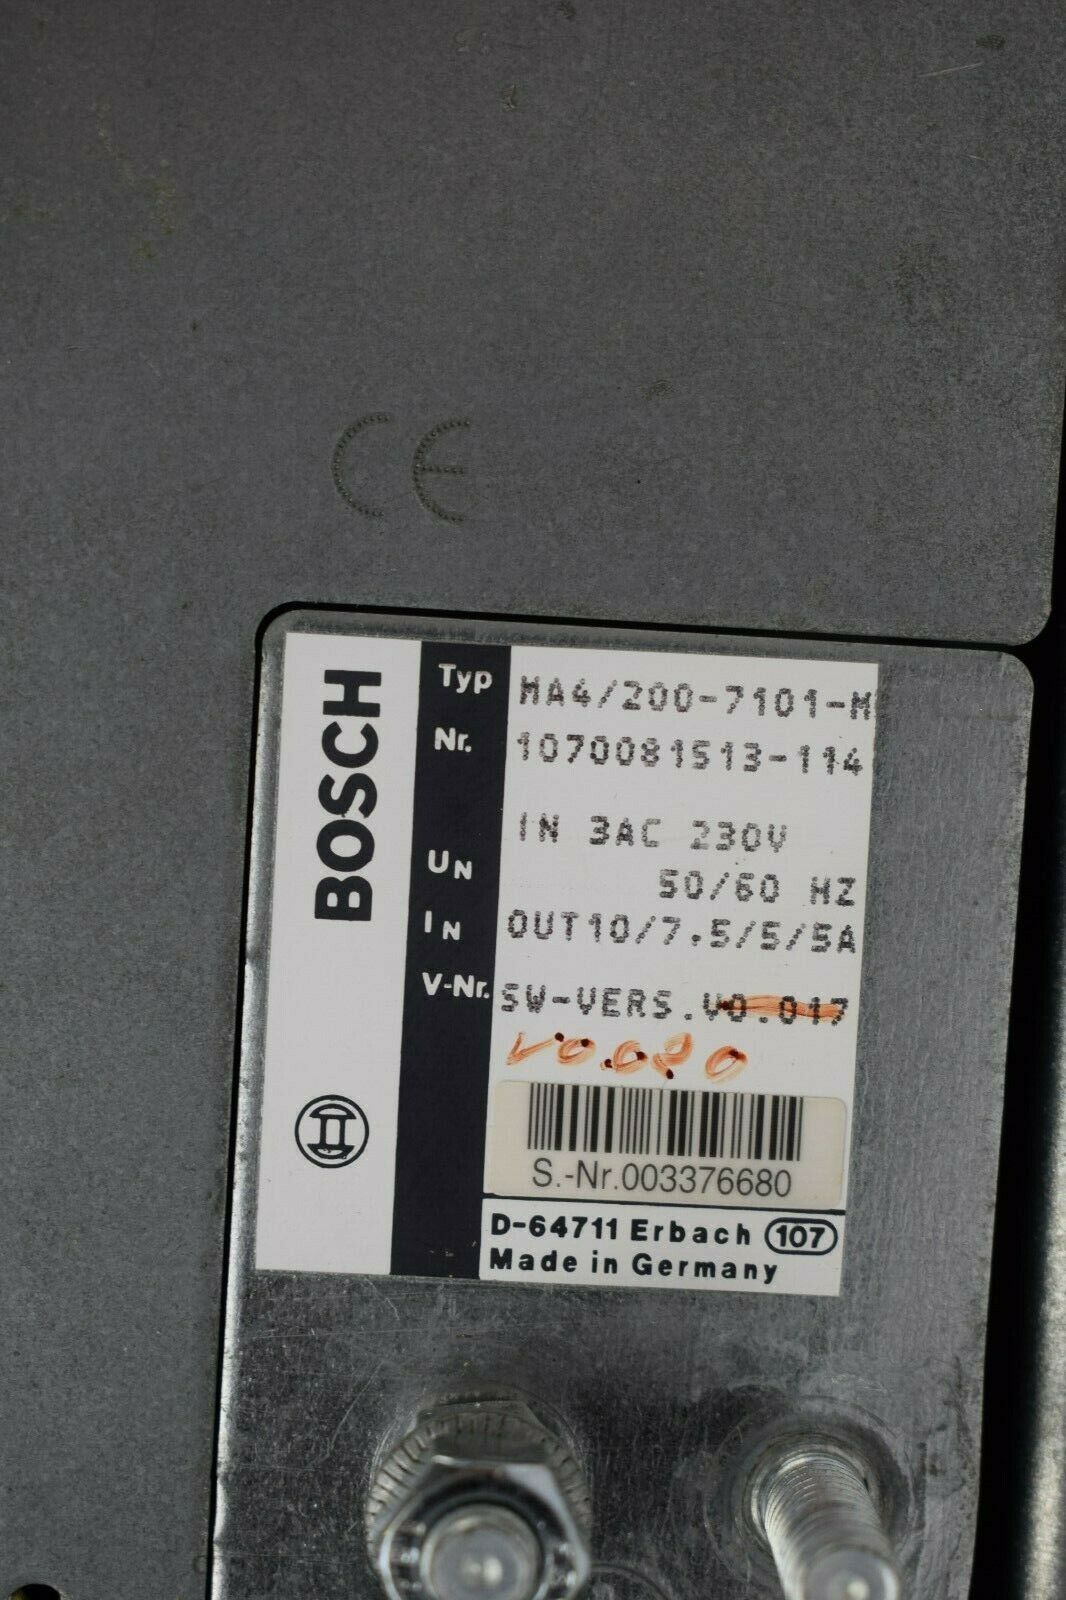 Bosch MA4/200-7101-M